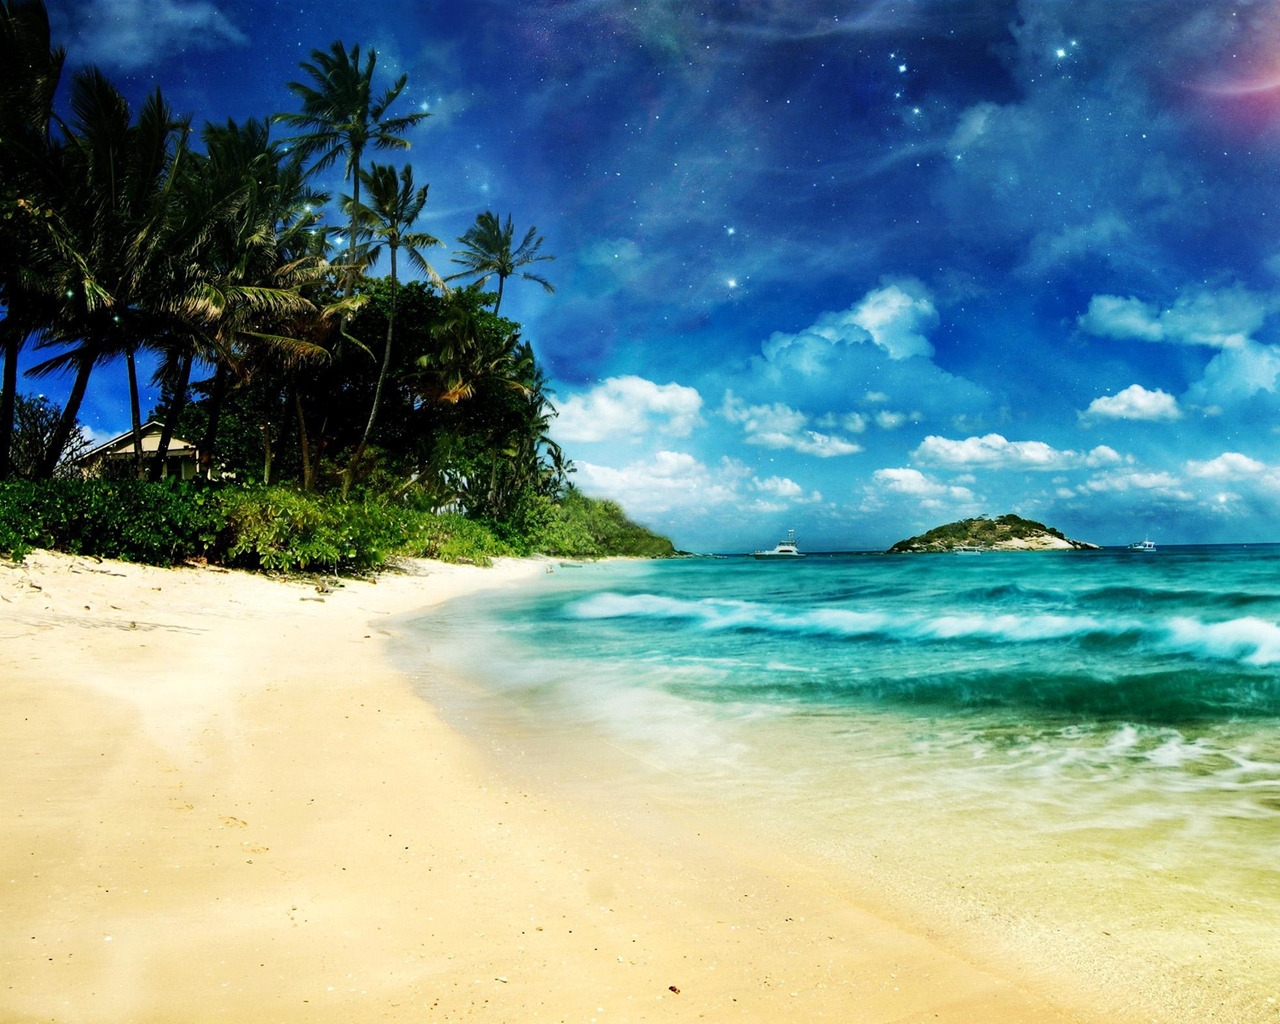 Superb Ocean Beach for 1280 x 1024 resolution